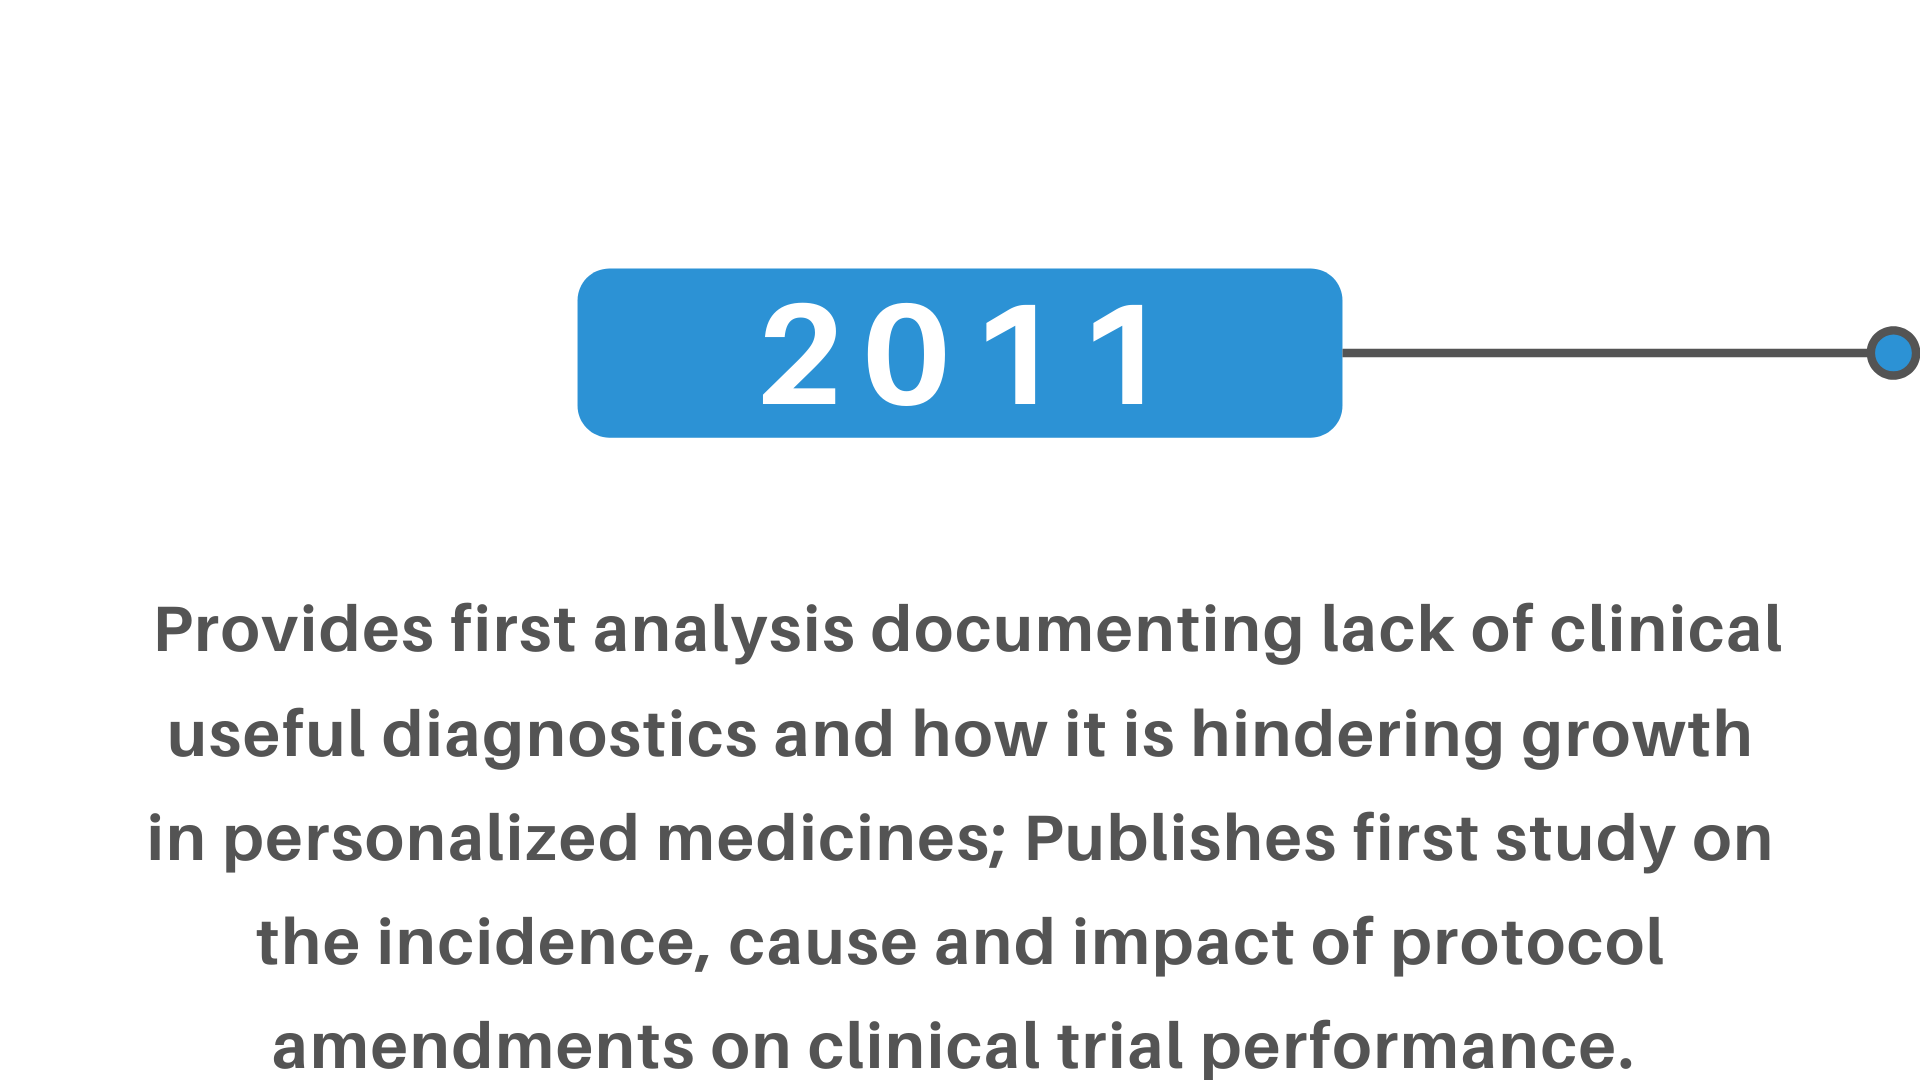 clinical useful diagnostics personalized medicines incidence protocol